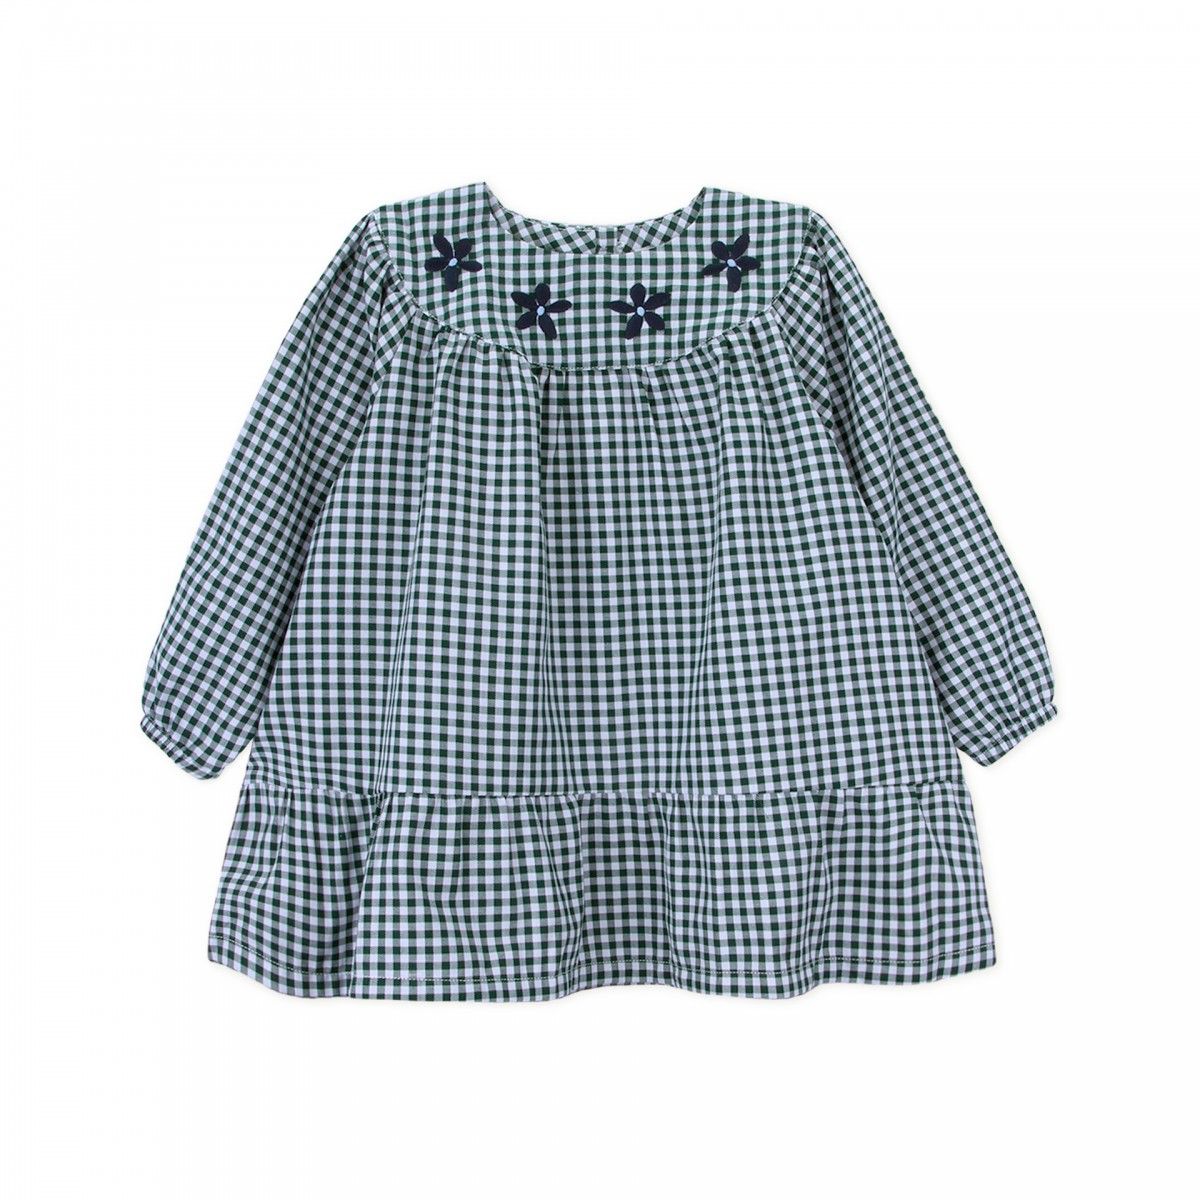 Baby girl flannel dress 6-36 months - VE18FL311115A | Knot